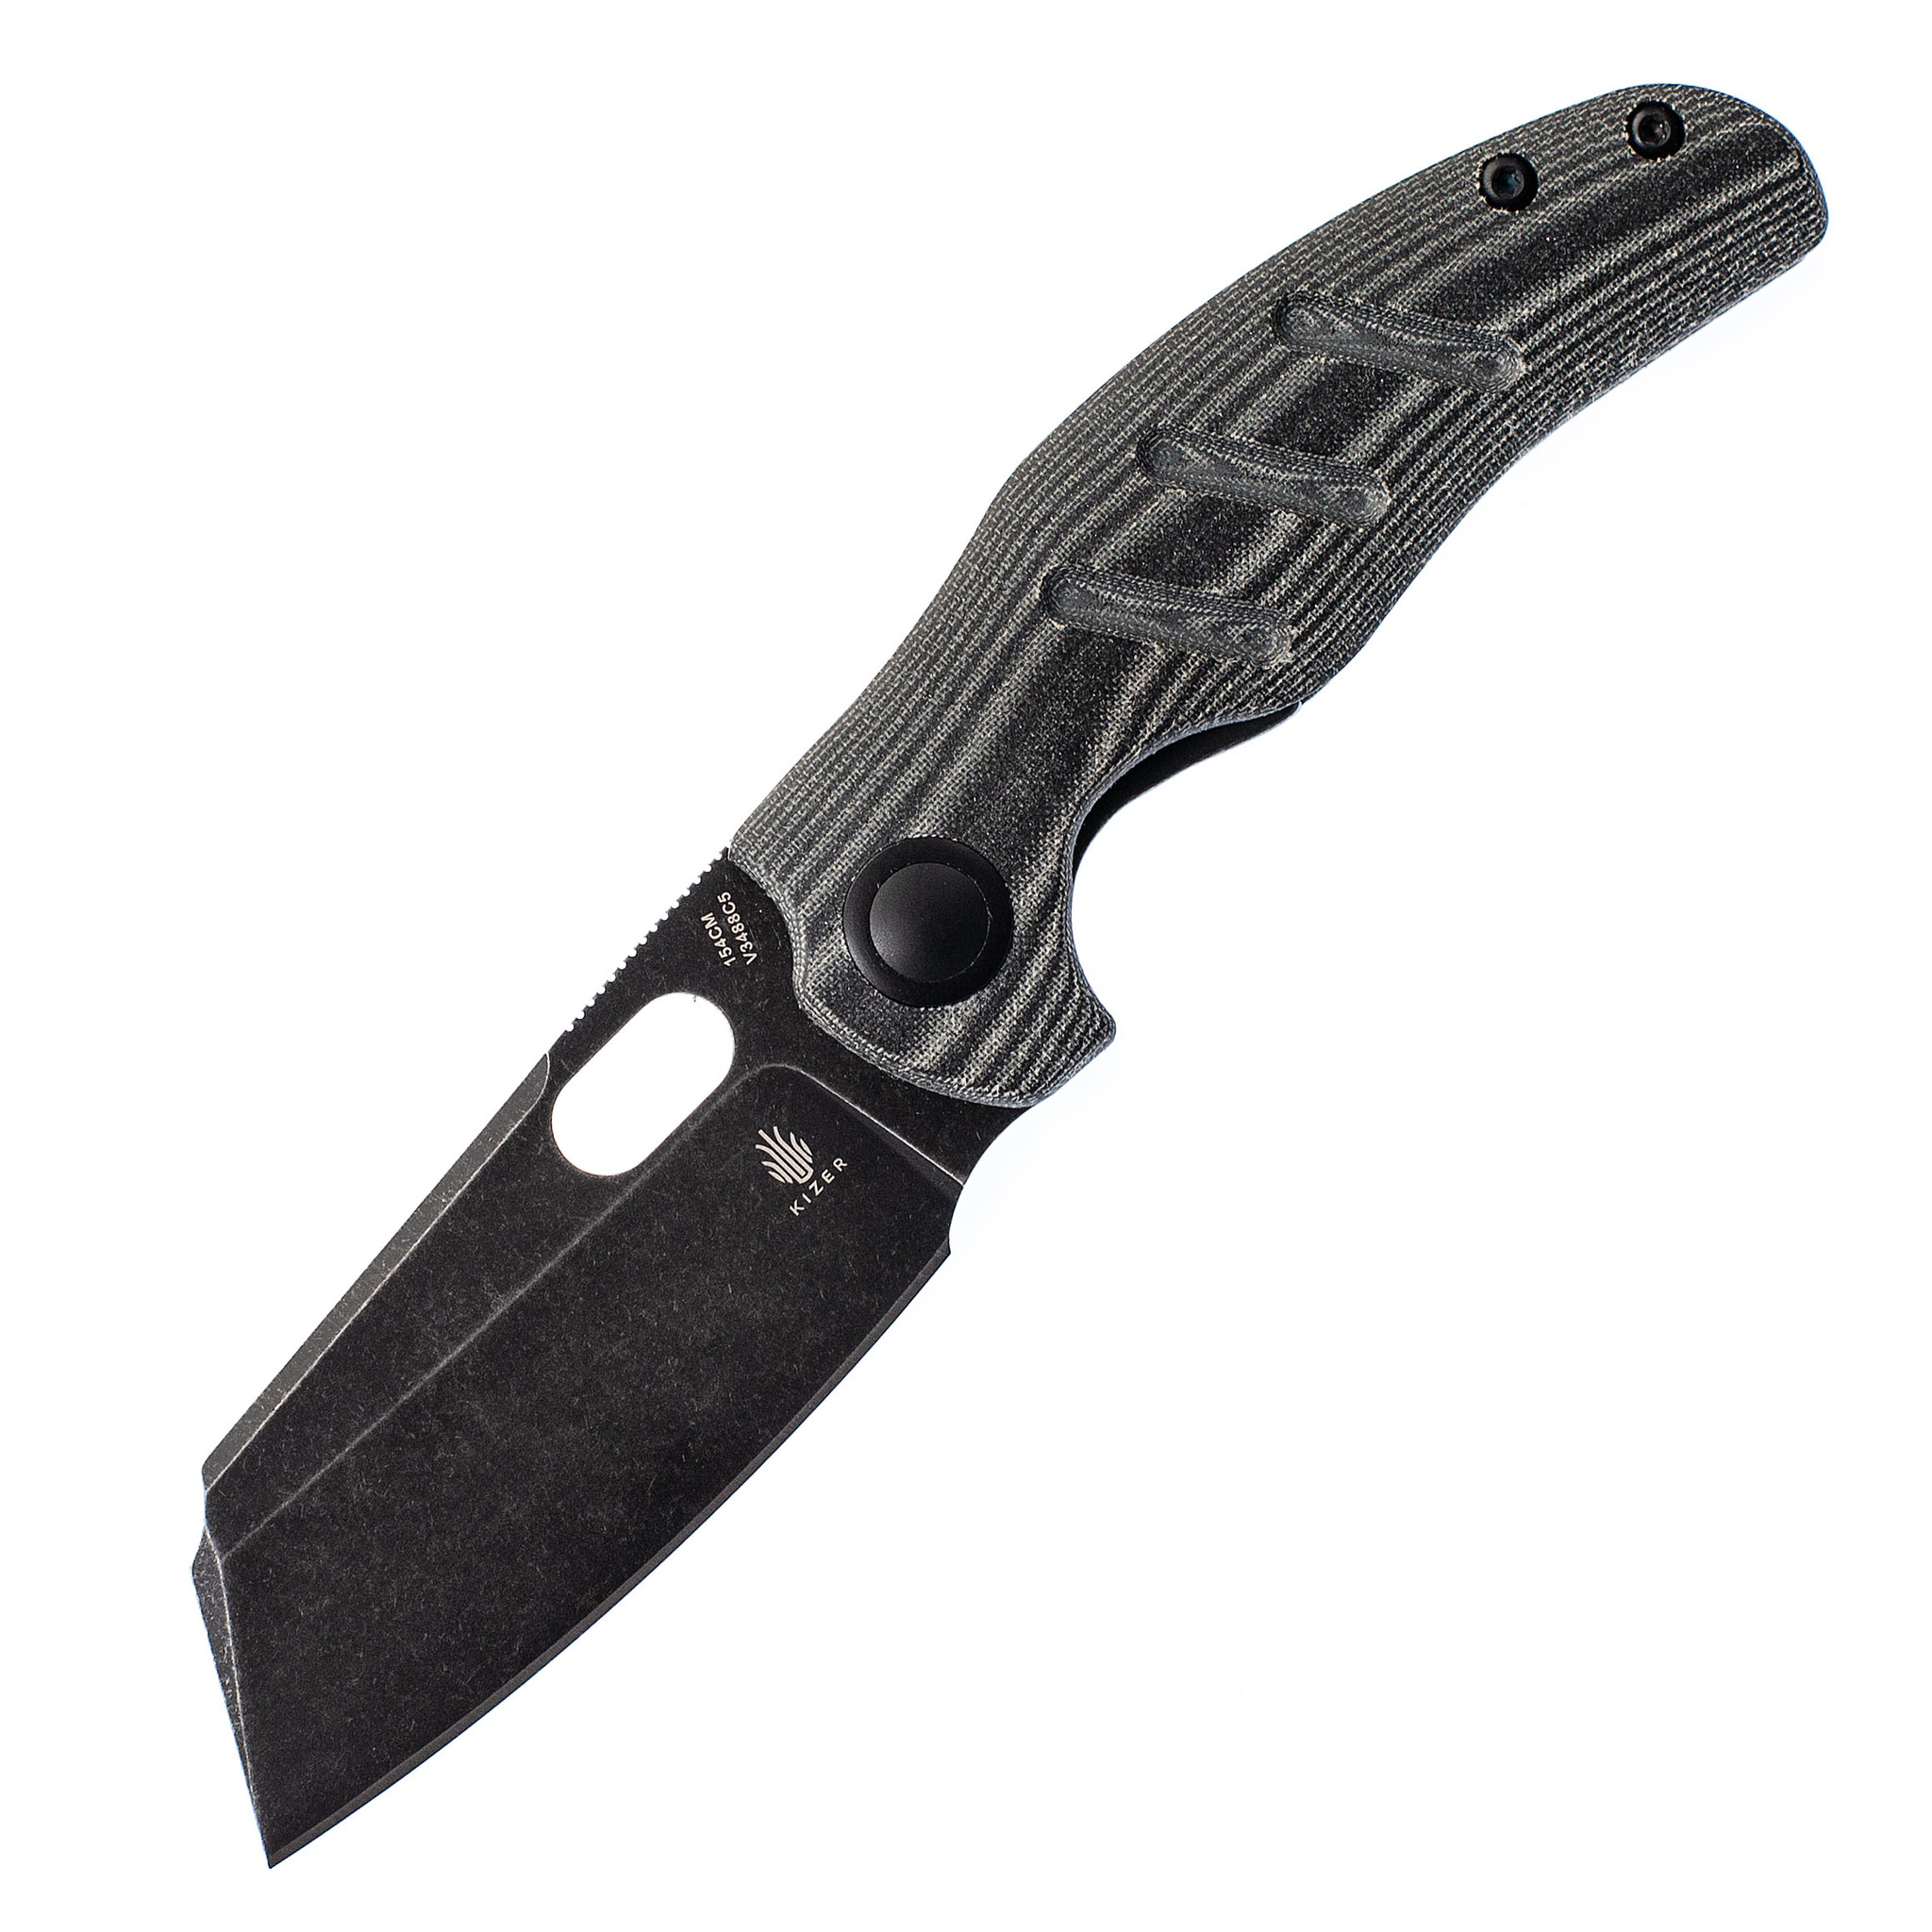 Складной нож Kizer C01C mini Black, сталь 154CM, рукоять микарта, Бренды, Kizer Cutlery